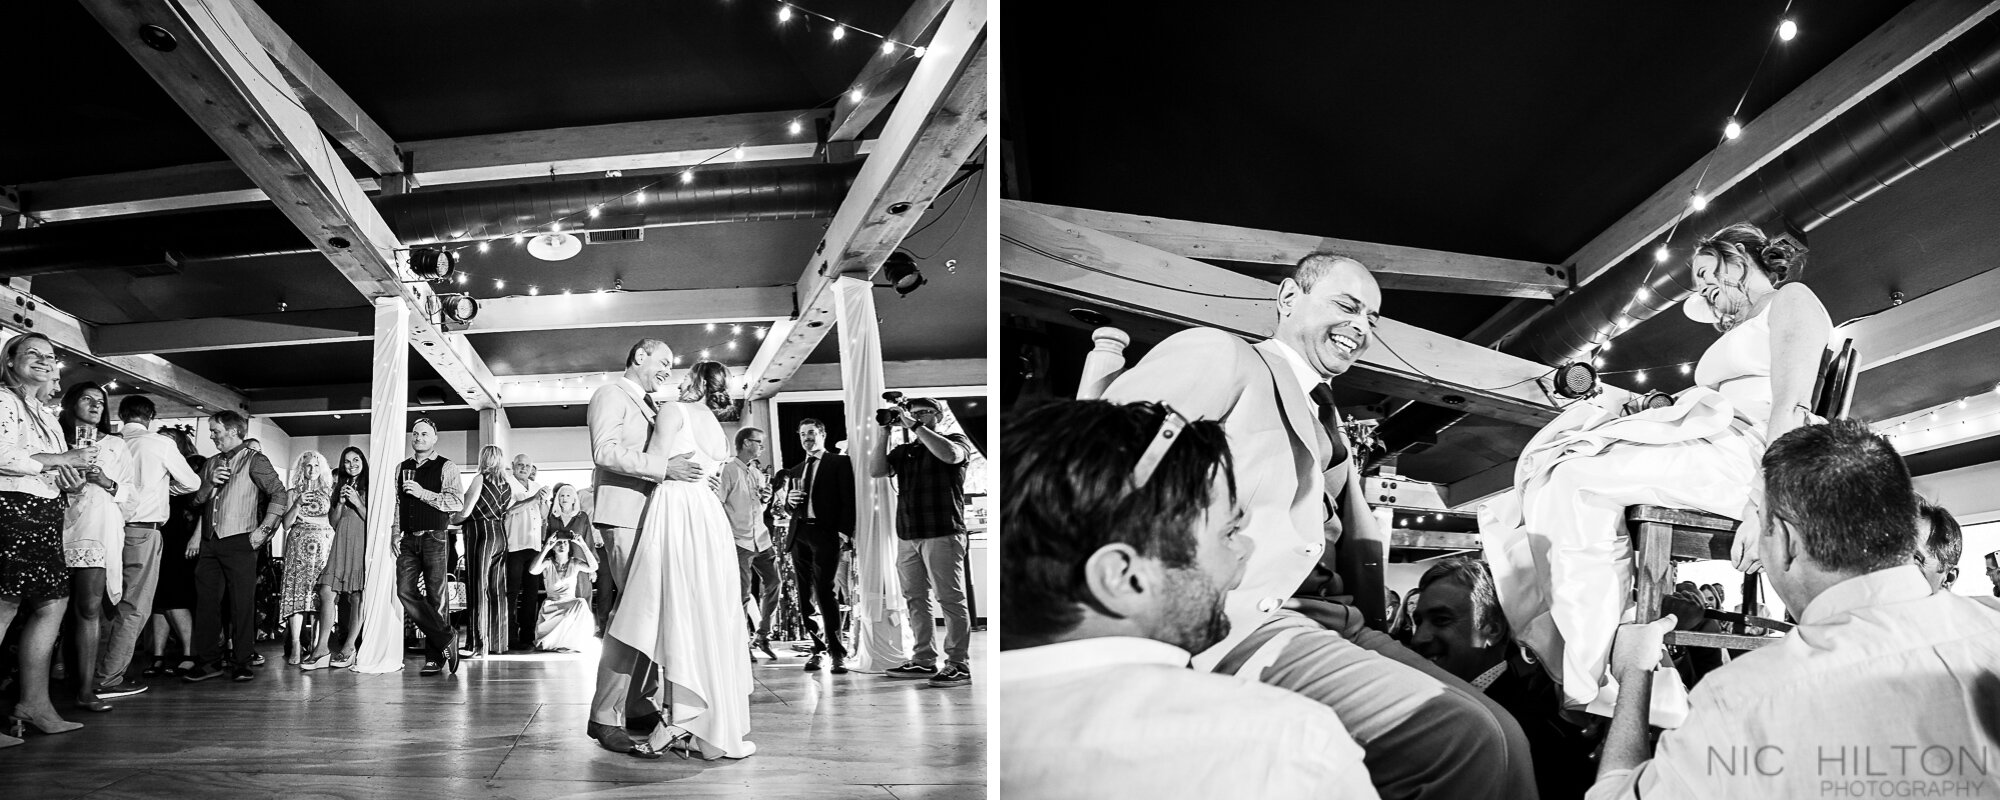 Mammoth-Brewery-wedding-reception-first-dance.jpg